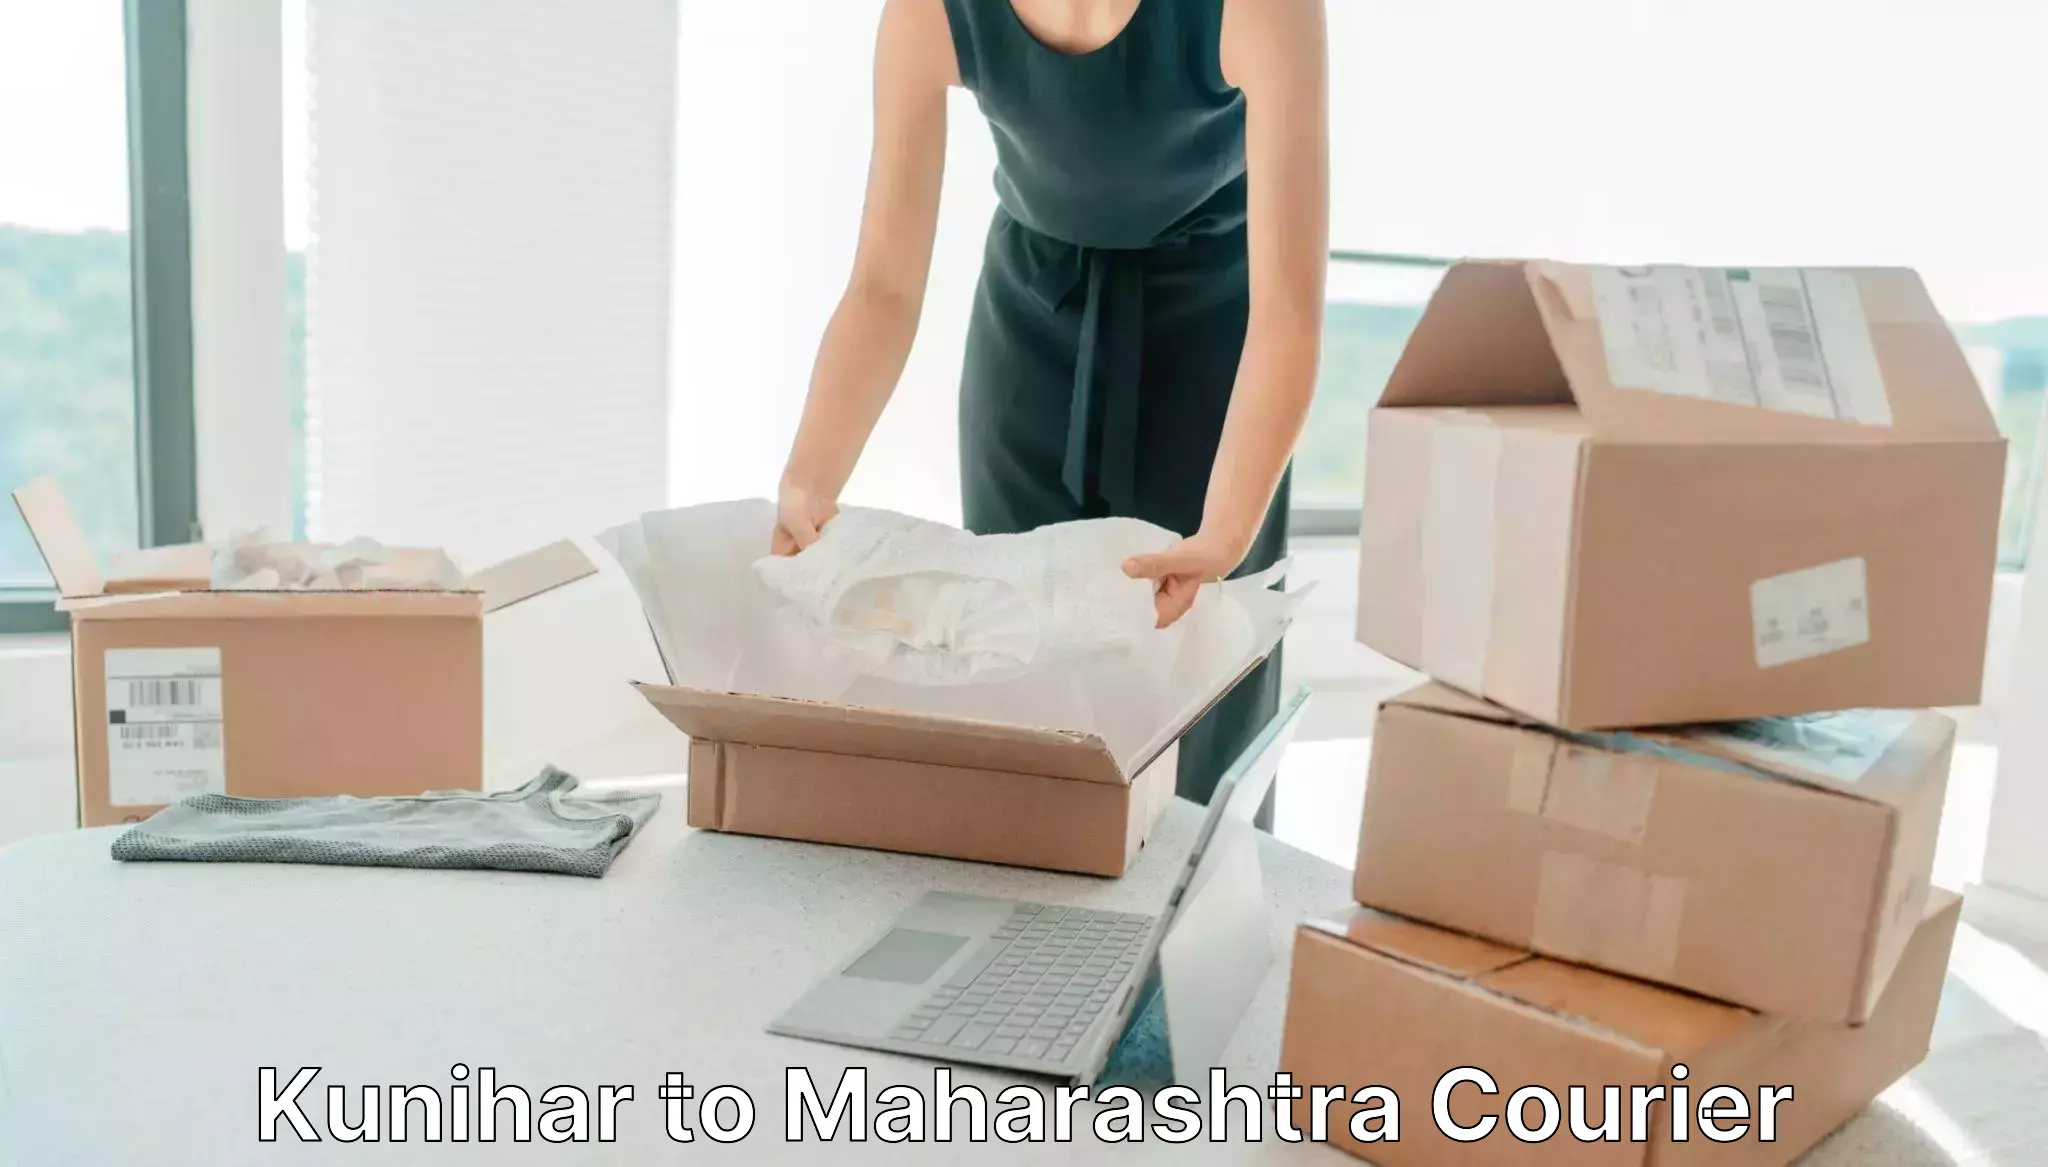 Customer-focused courier Kunihar to Morshi